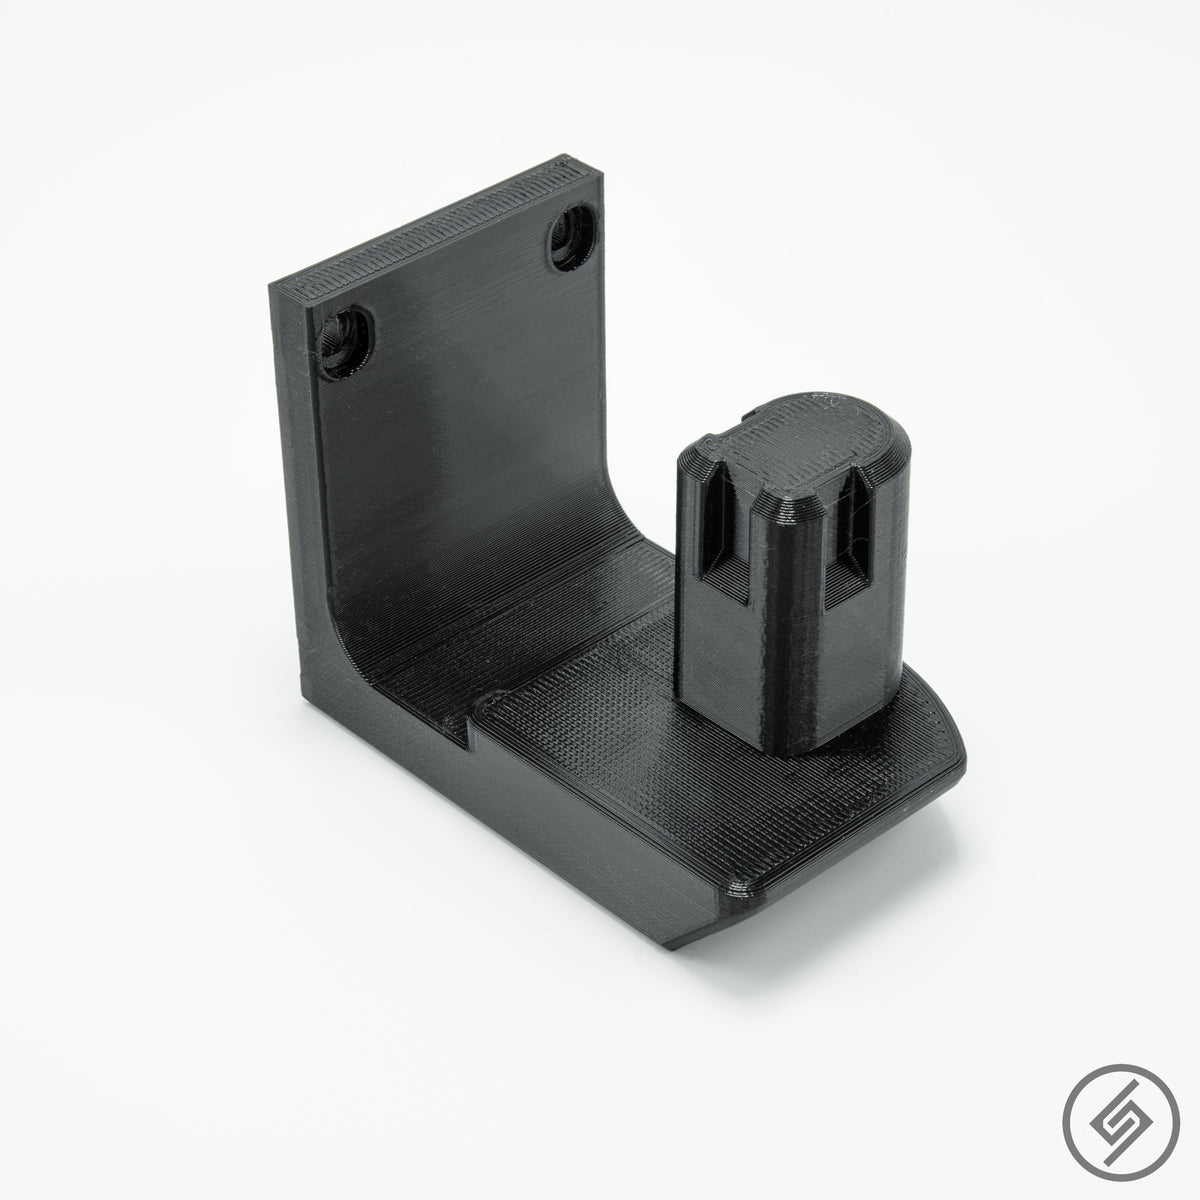 3D Printed Tool Mount for Ryobi Circular Saw/ Vacuum or Other 18V Ryobi  Tools 